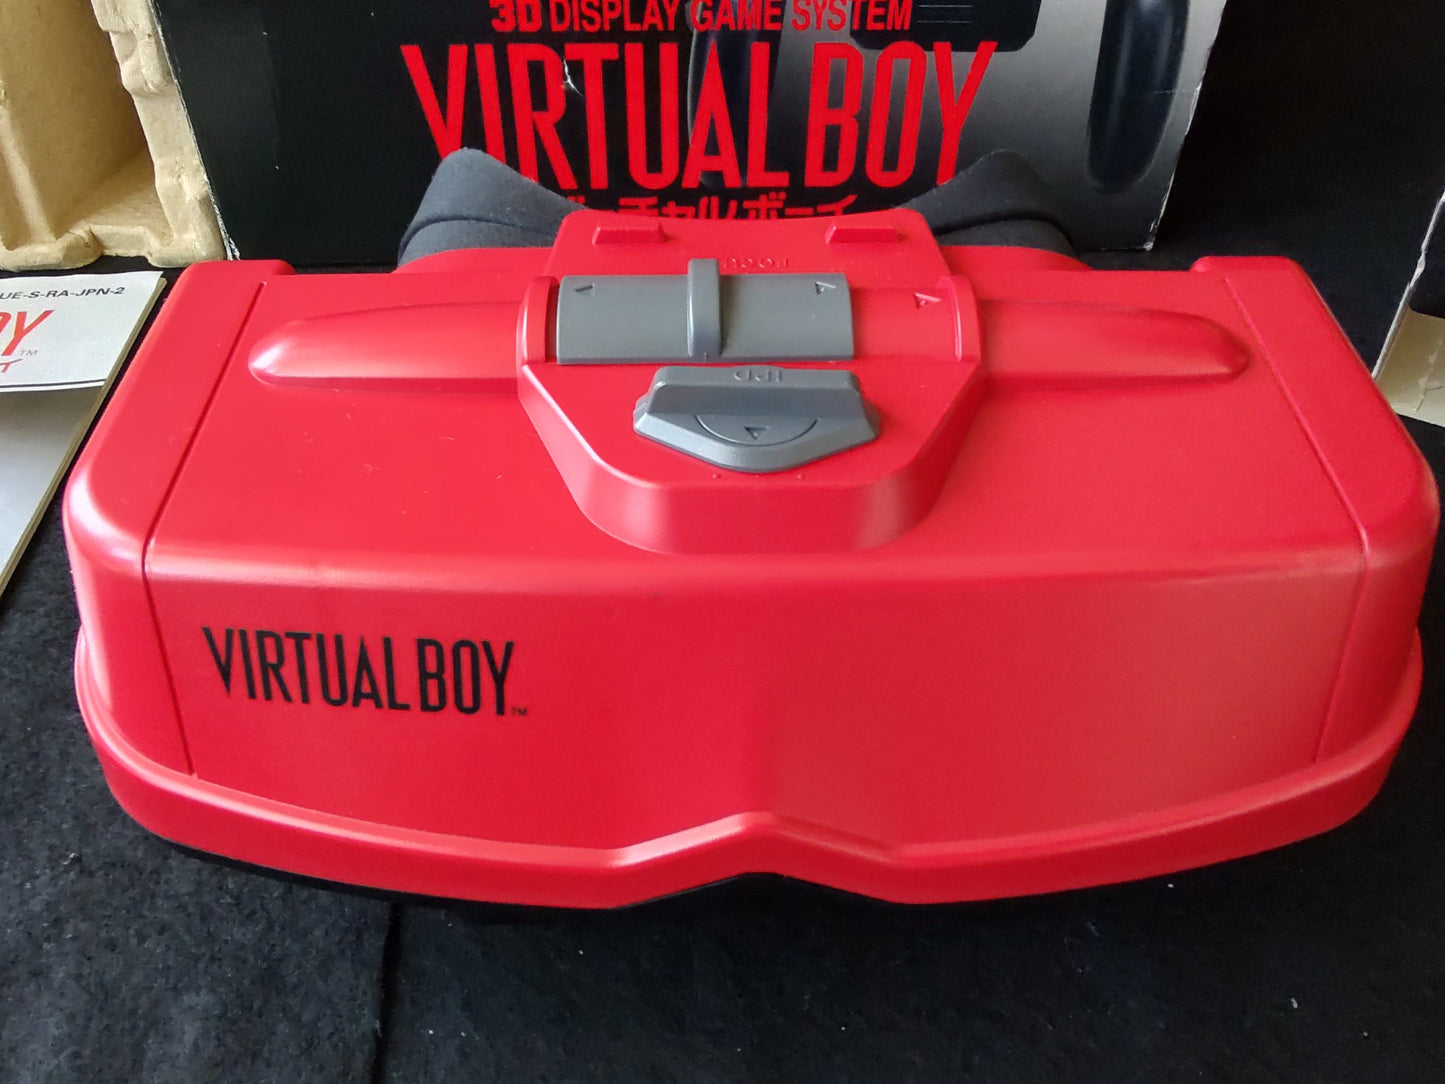 Nintendo Virtual Boy Console, Pad, Manual, Game w/Accessories, Box set-f0603-